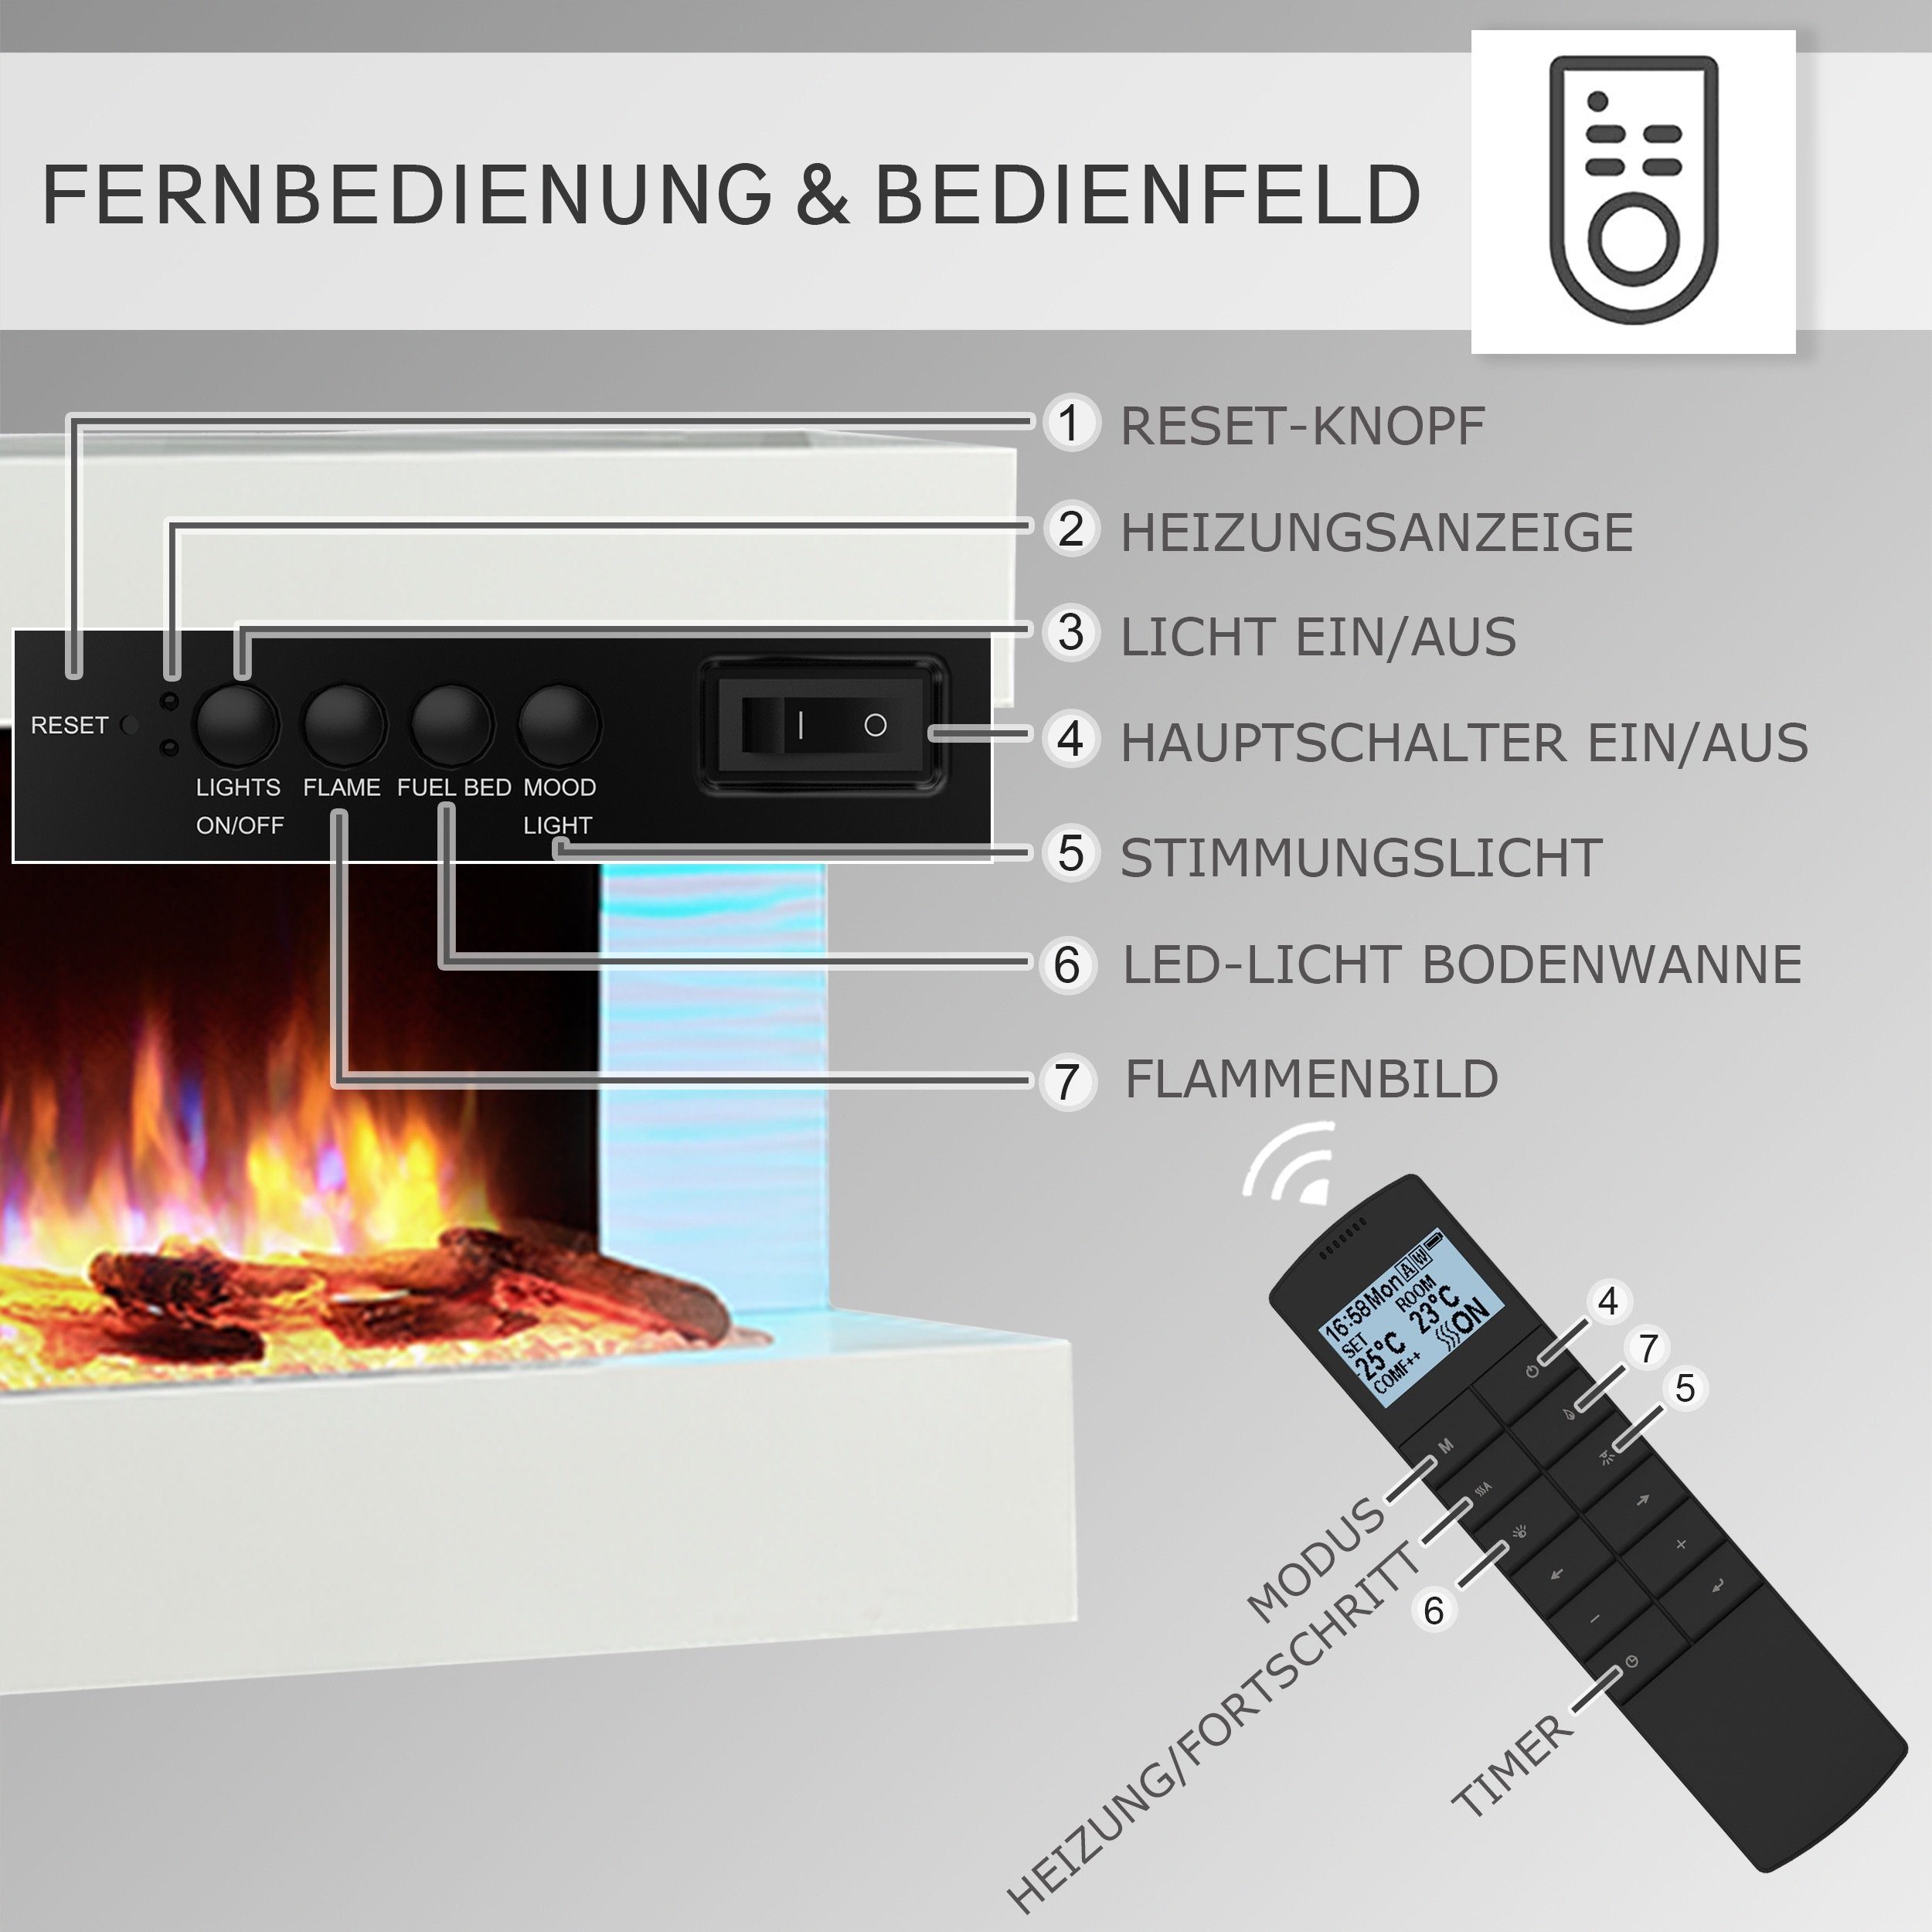 Heizung 3D-Flammeneffekt, Timer, 2000W, LED-Beleuchtung, RICHEN Thermostat Helia, mit Wandkamin Elektrokamin Fernbedienung, Weiß